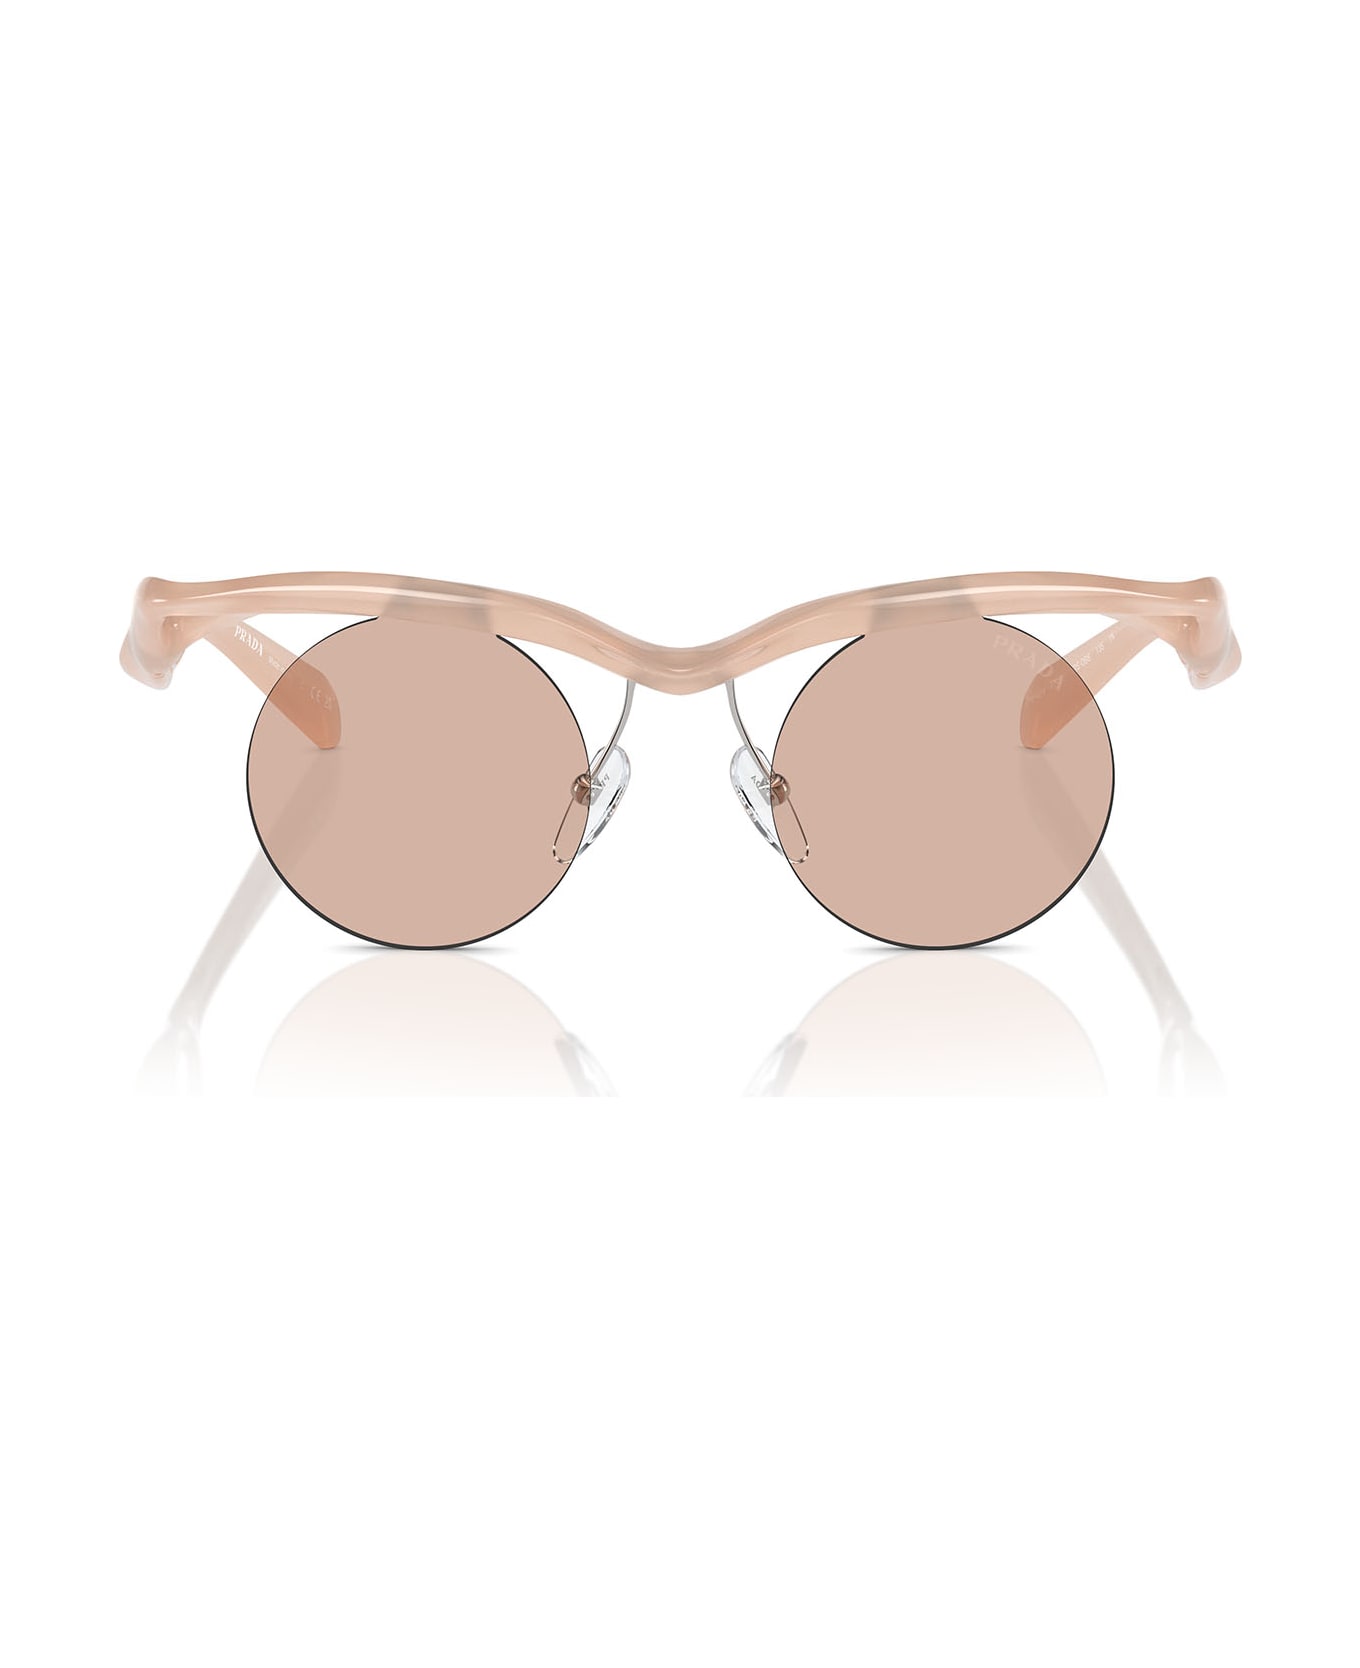 Prada Eyewear Pr A24s Opal Peach Sunglasses - Opal Peach サングラス